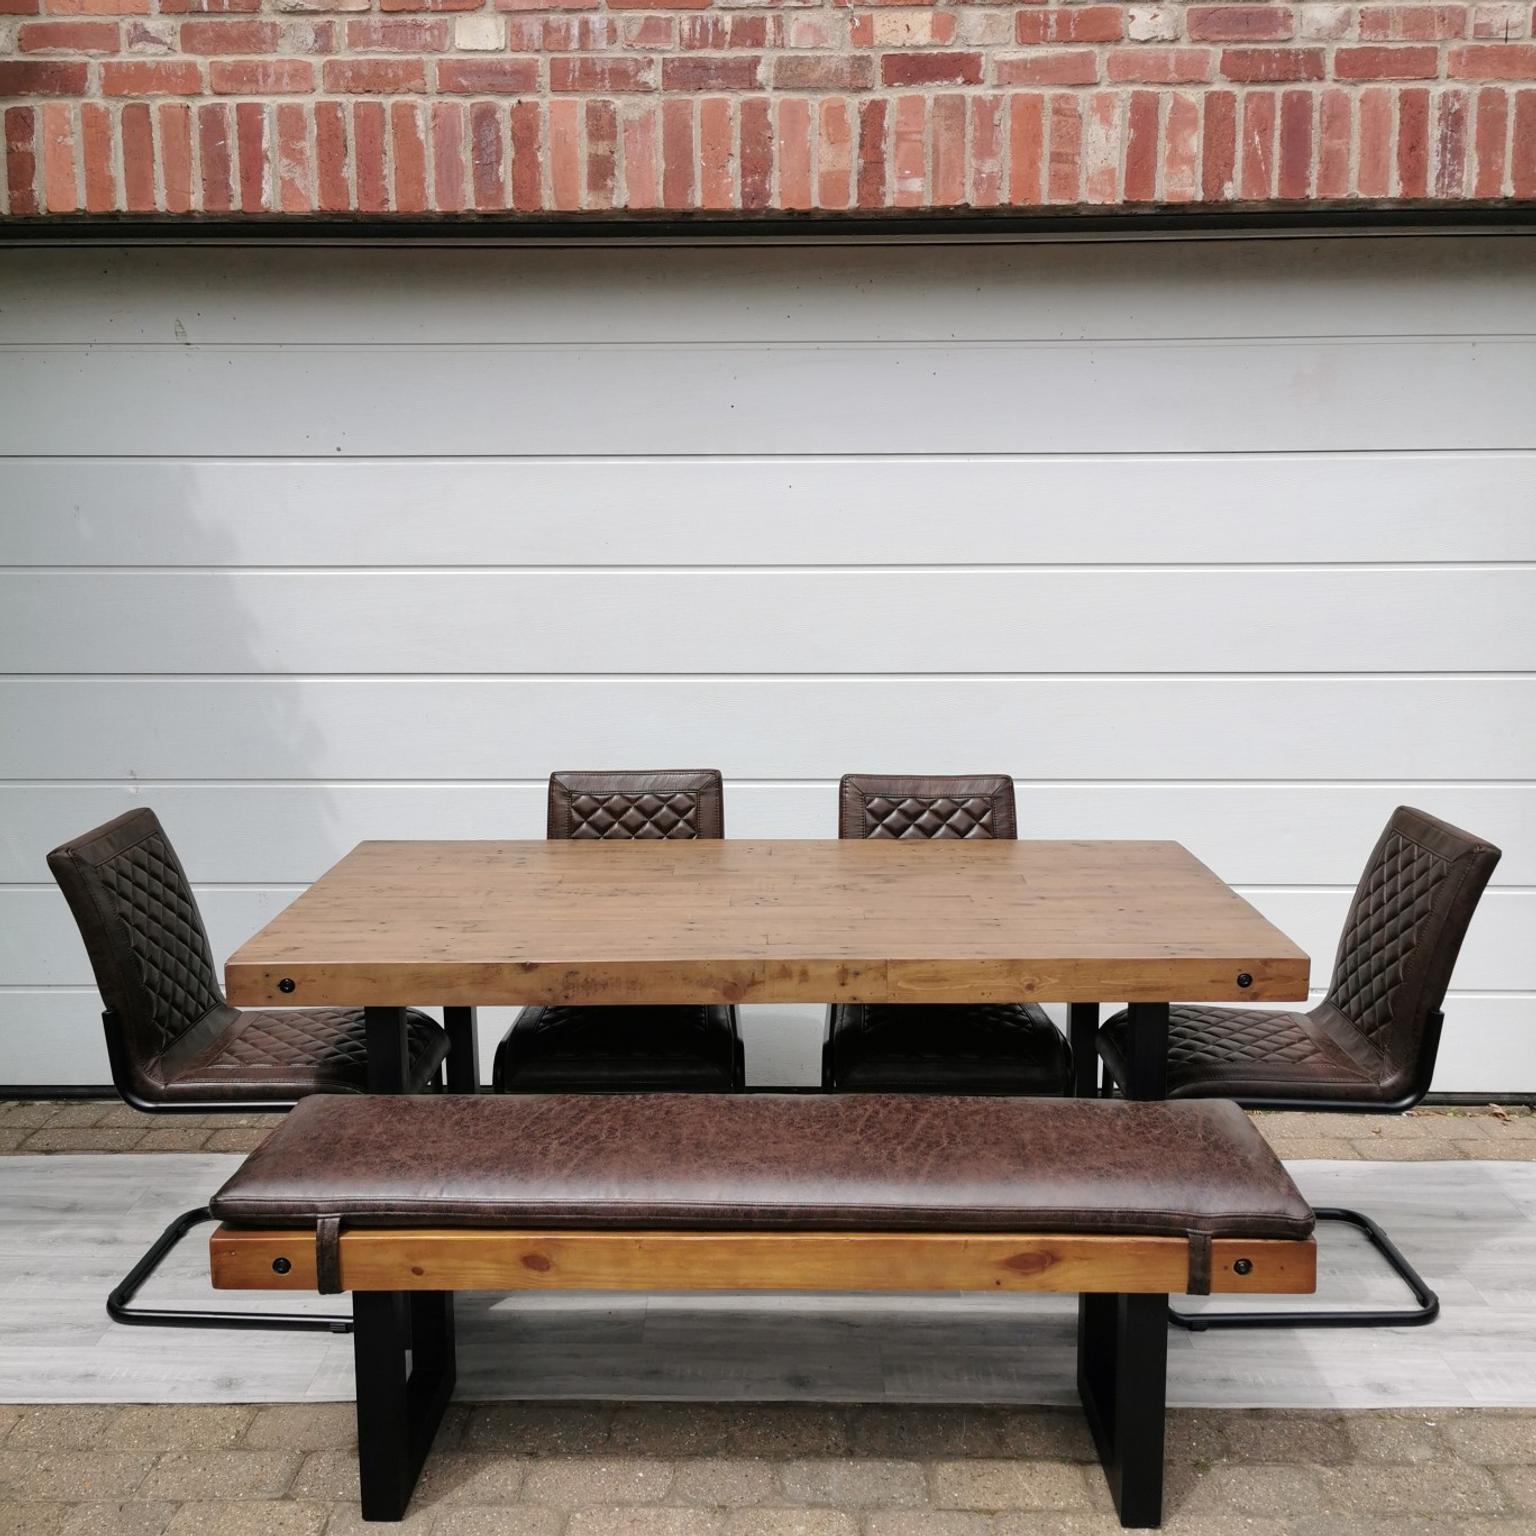 Montana Rustic Dining Table 4 Chairs Bench In Dn22 Bassetlaw Fur 850 00 Zum Verkauf Shpock De